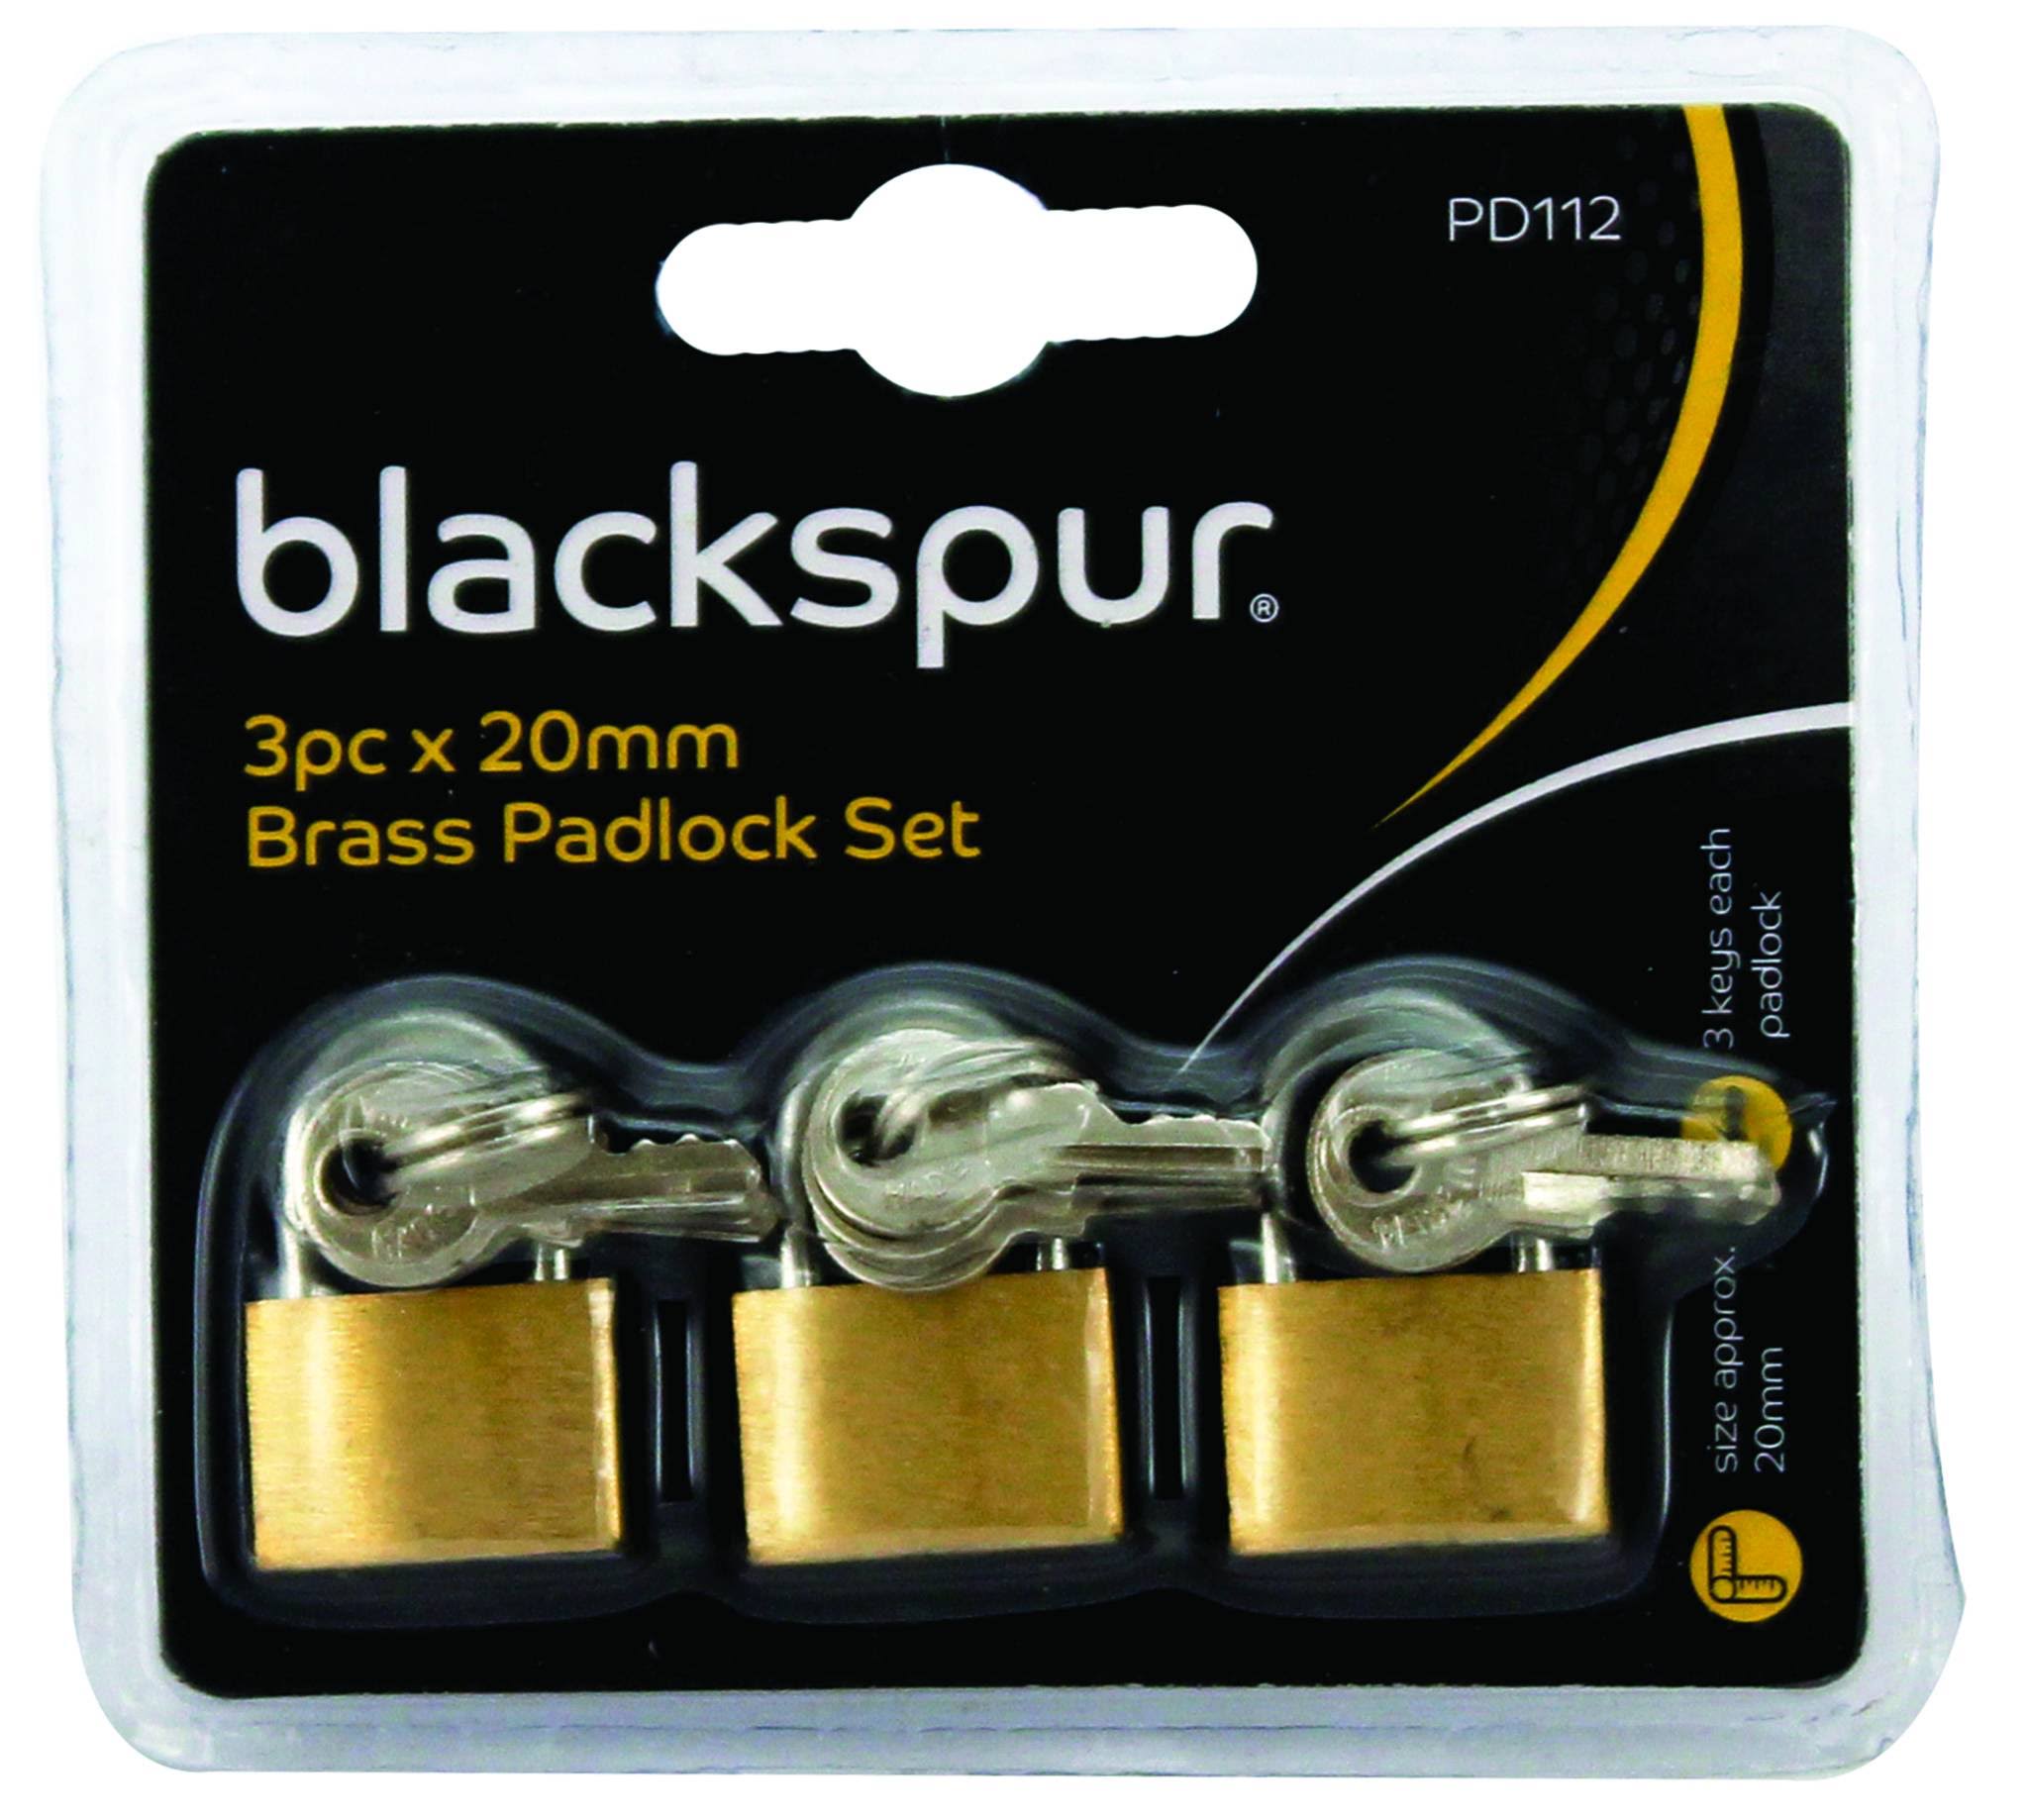 Blackspur BB-PD112 Brass Padlock Set